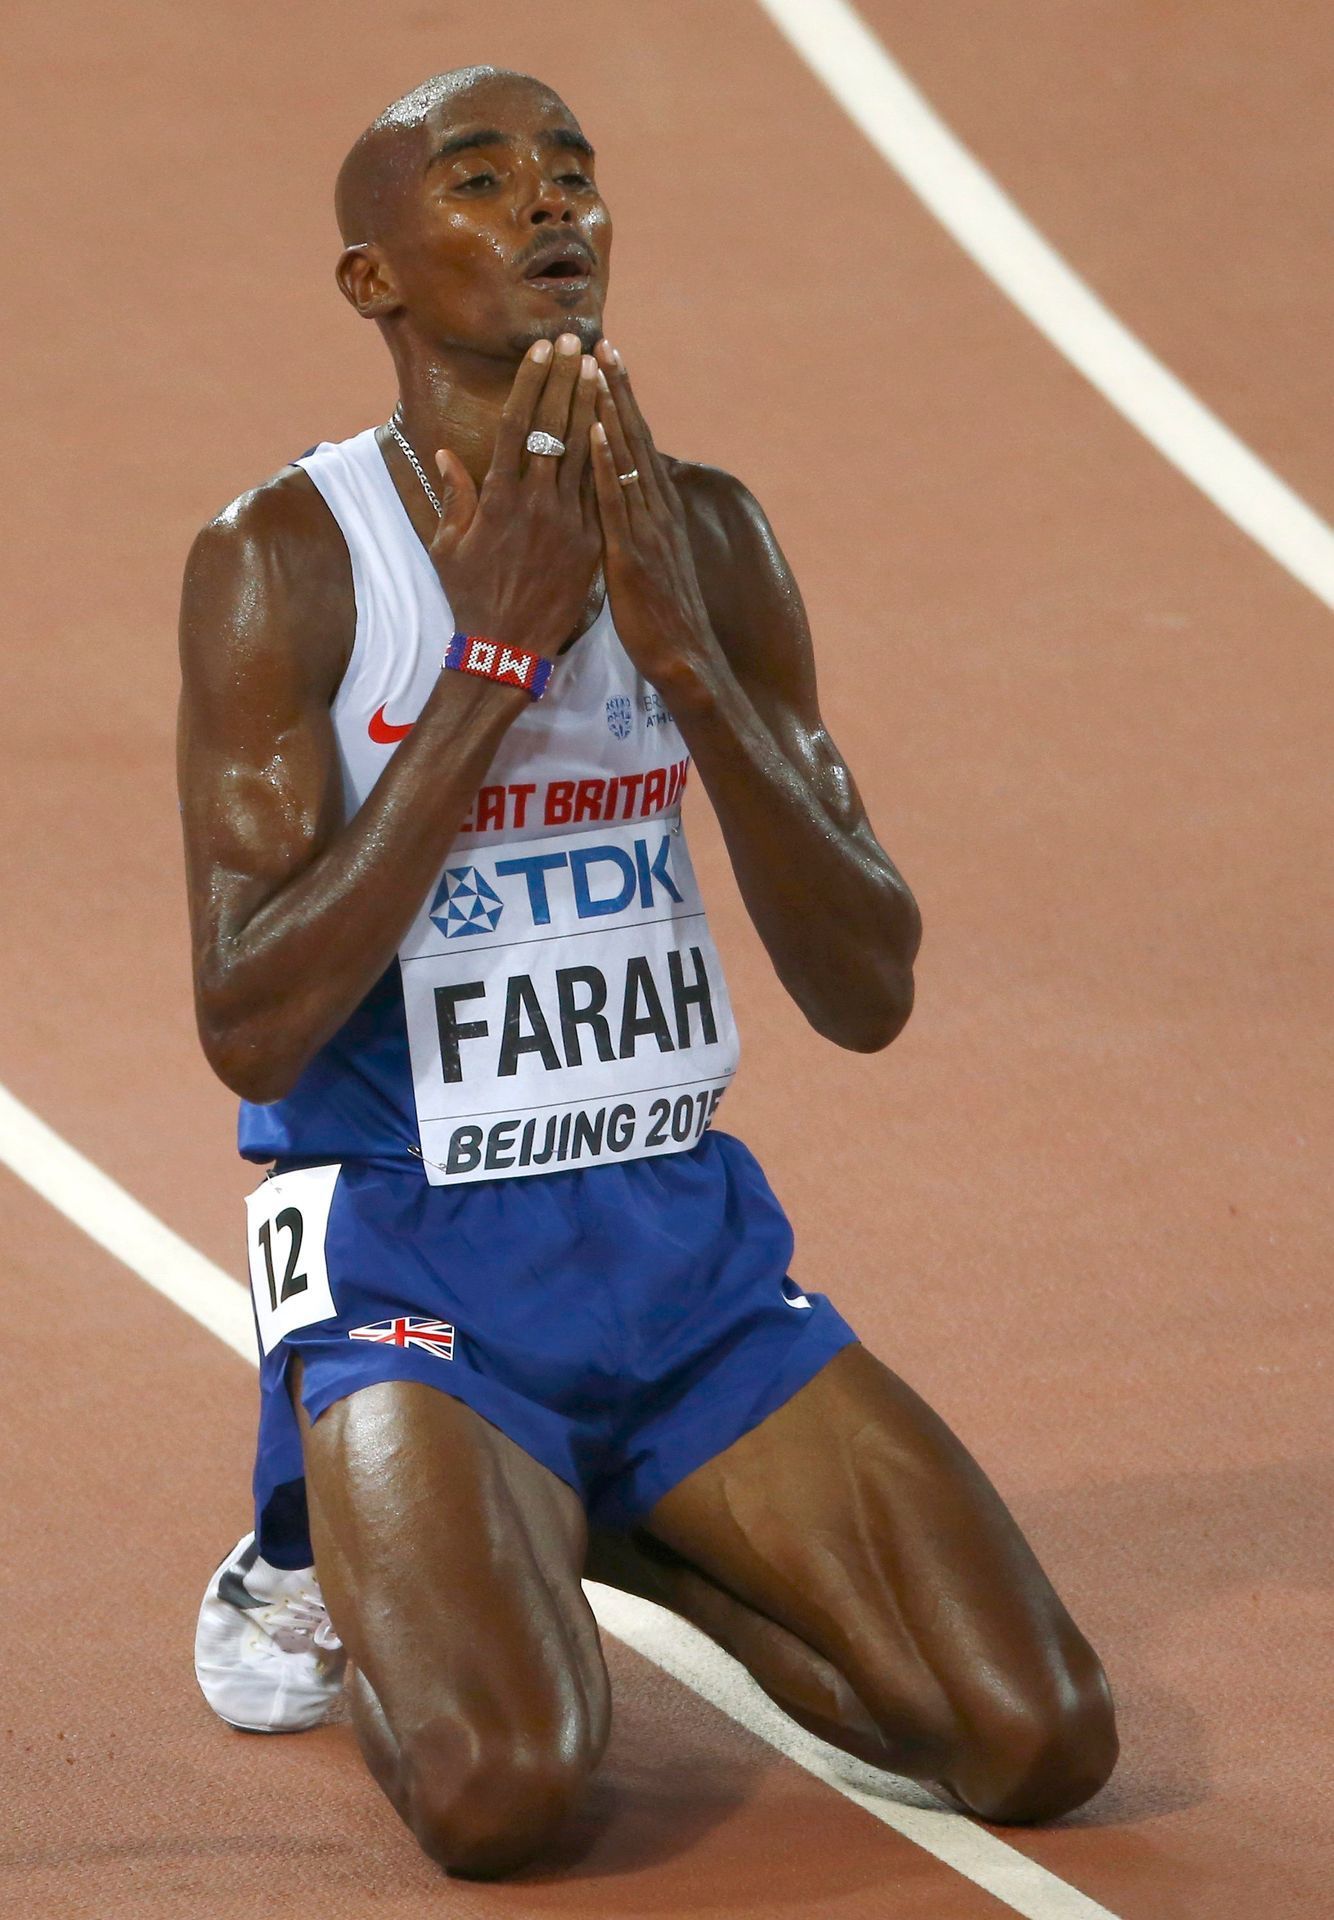 MS v atletice 2015, 10 000 m: Mo Farah